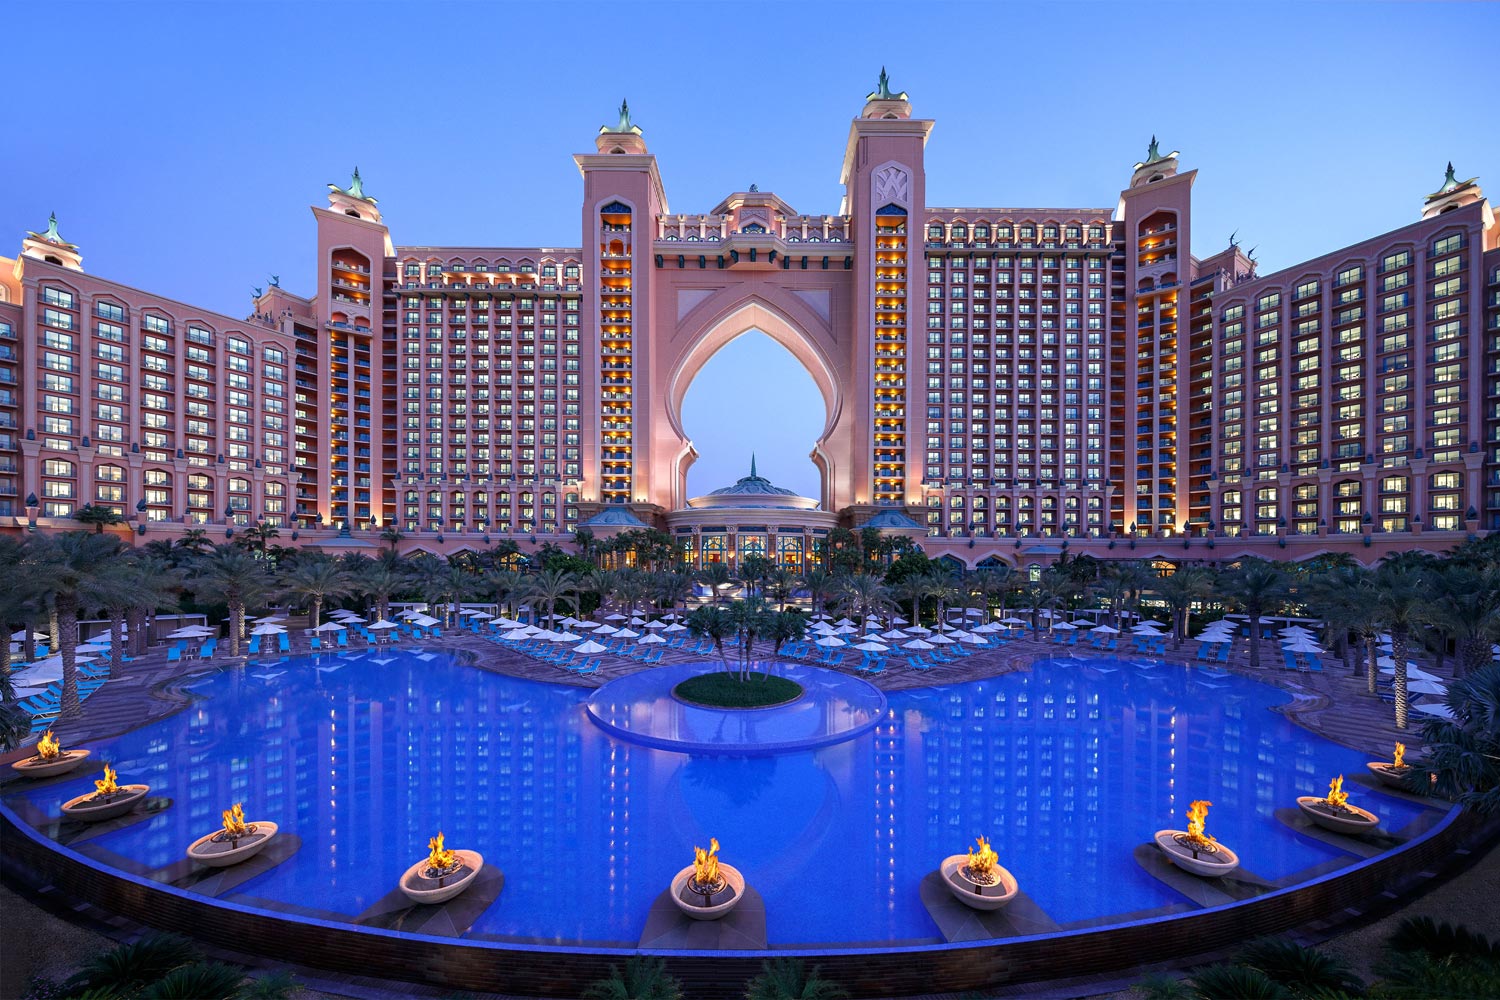 Atlantis The Palm Dubais Iconic Five Star Hotel And Luxury Resort | My ...